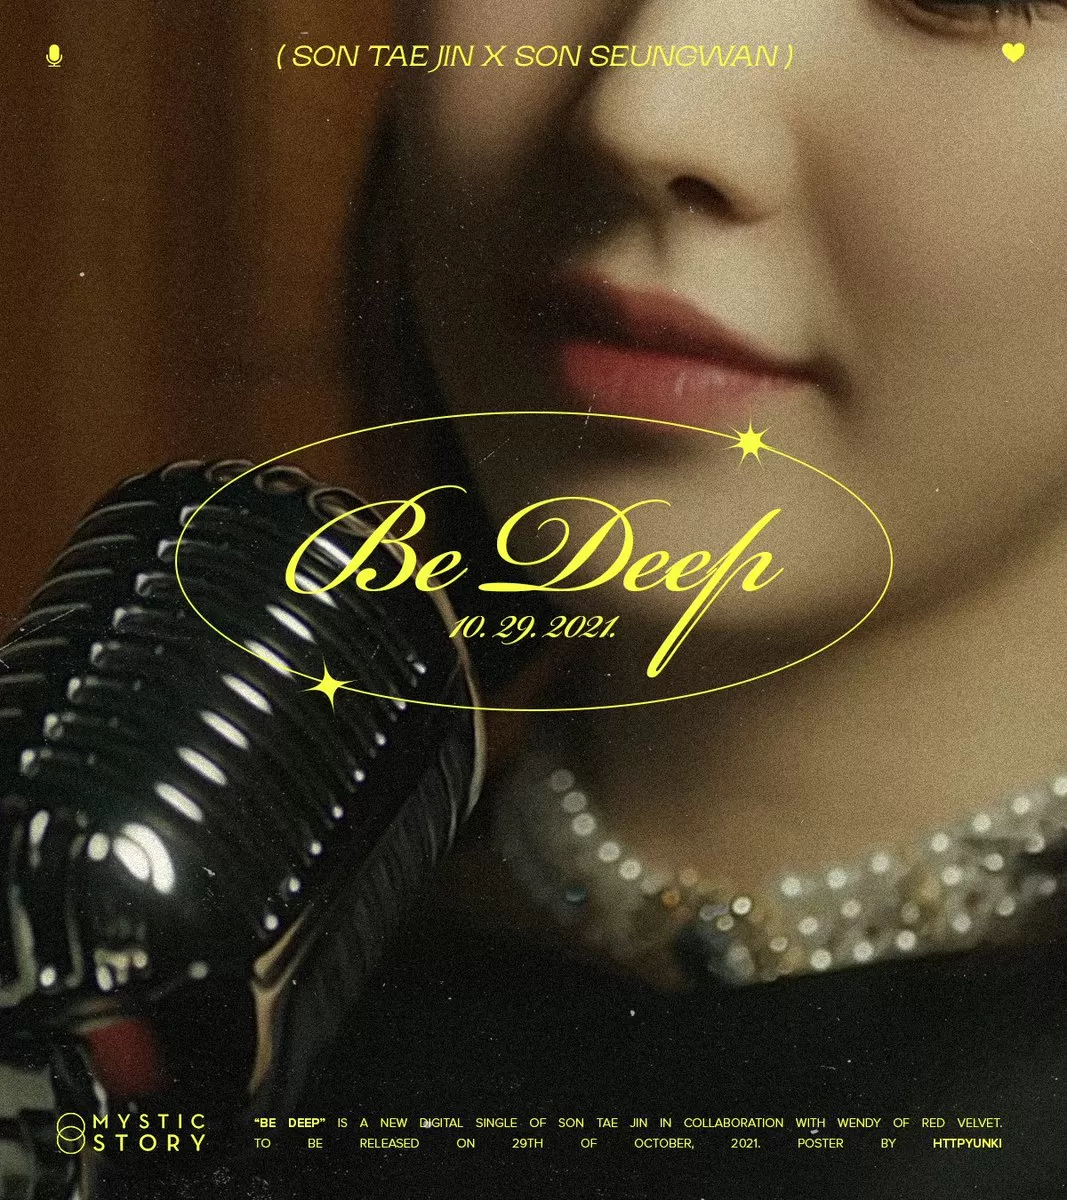 دانلود آهنگ جدید Be Deep (Feat. WENDY) به نام Son Tae Jin